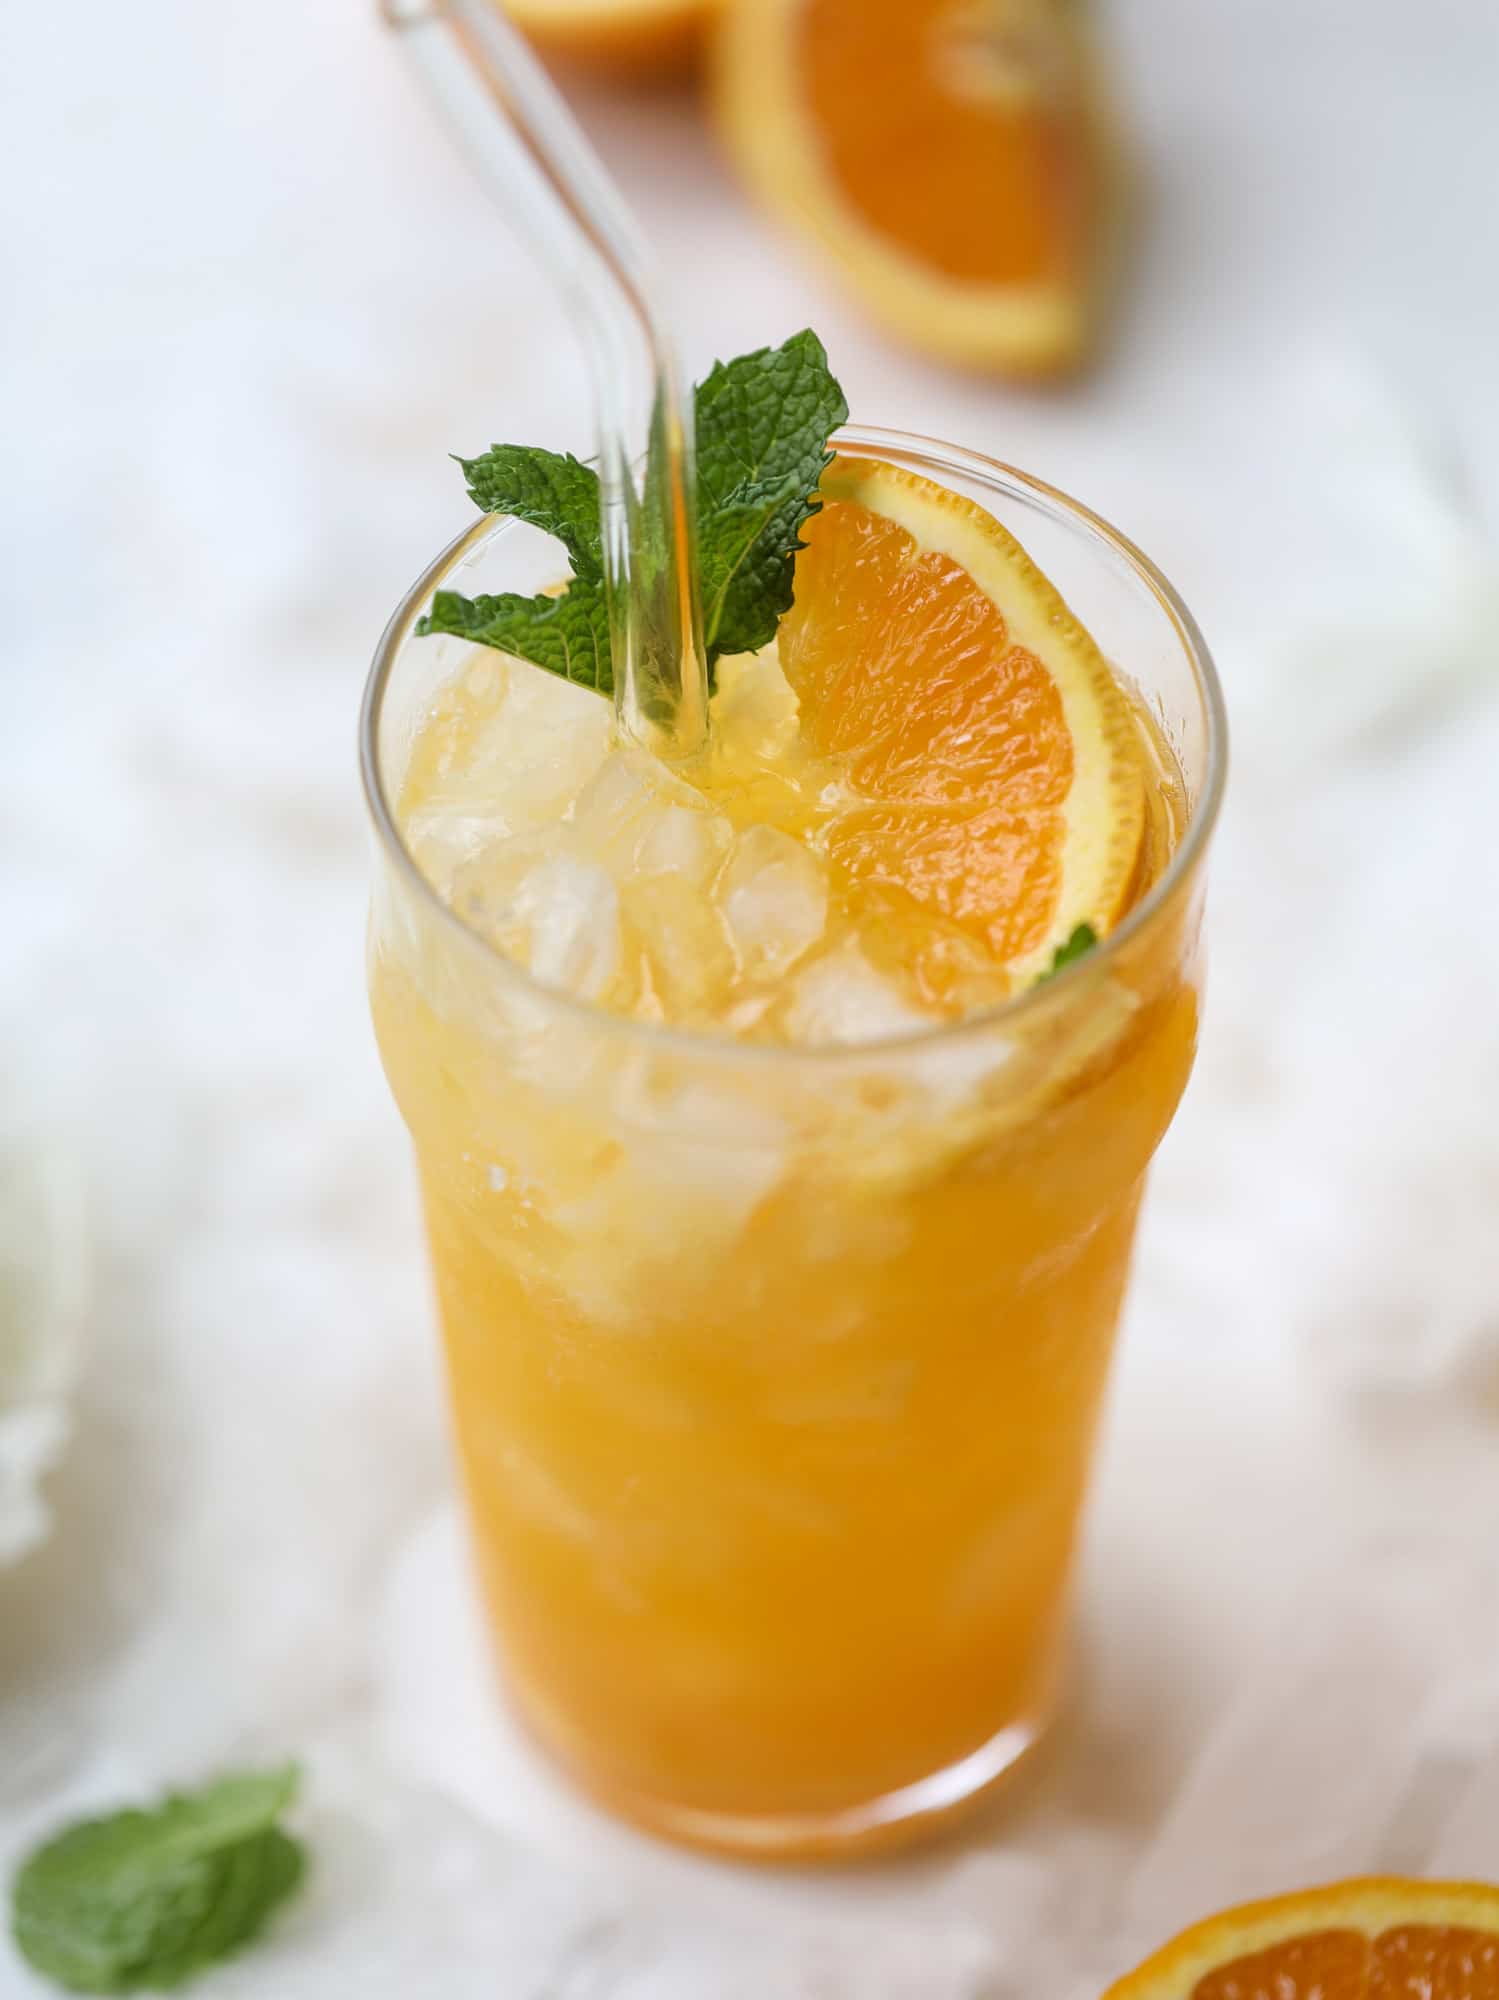 Orange Crush - The Orange Crush Cocktail from Ocean City